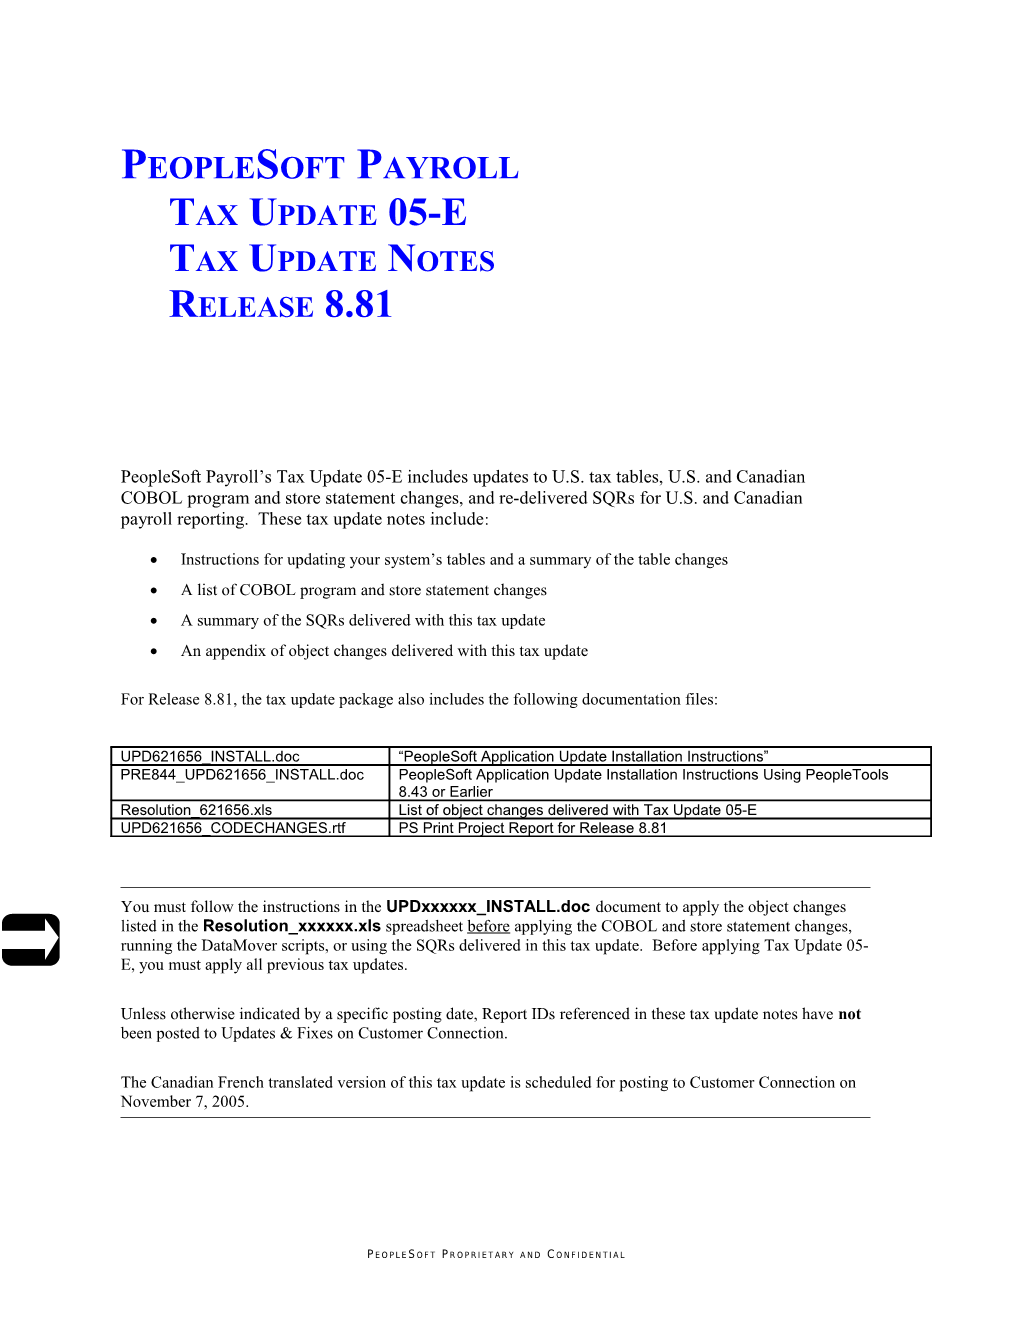 8.01 - Peoplesoft Payroll Tax Update 05-E